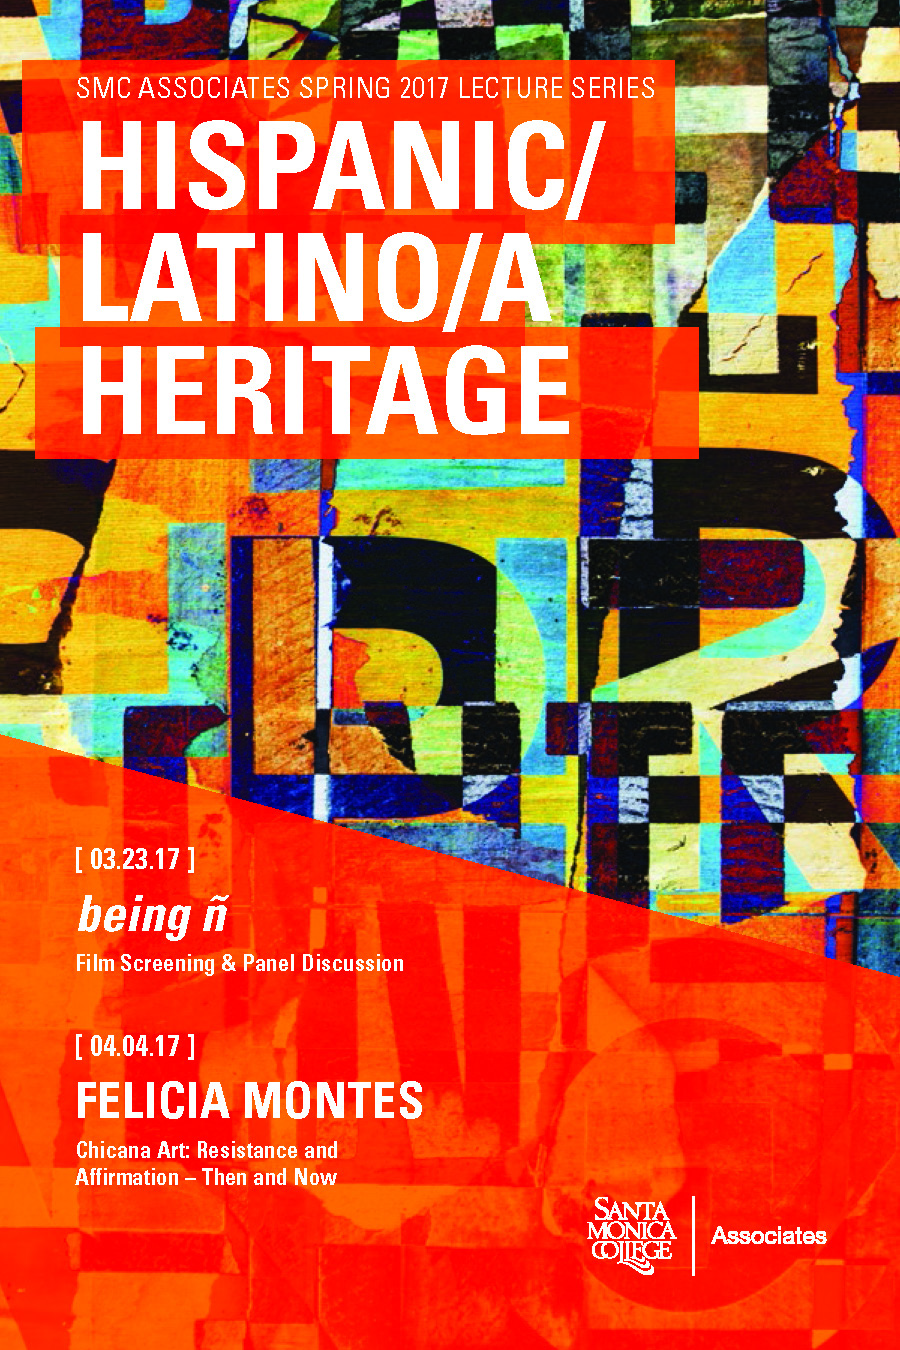 Hispanic/Latino/A Heritage